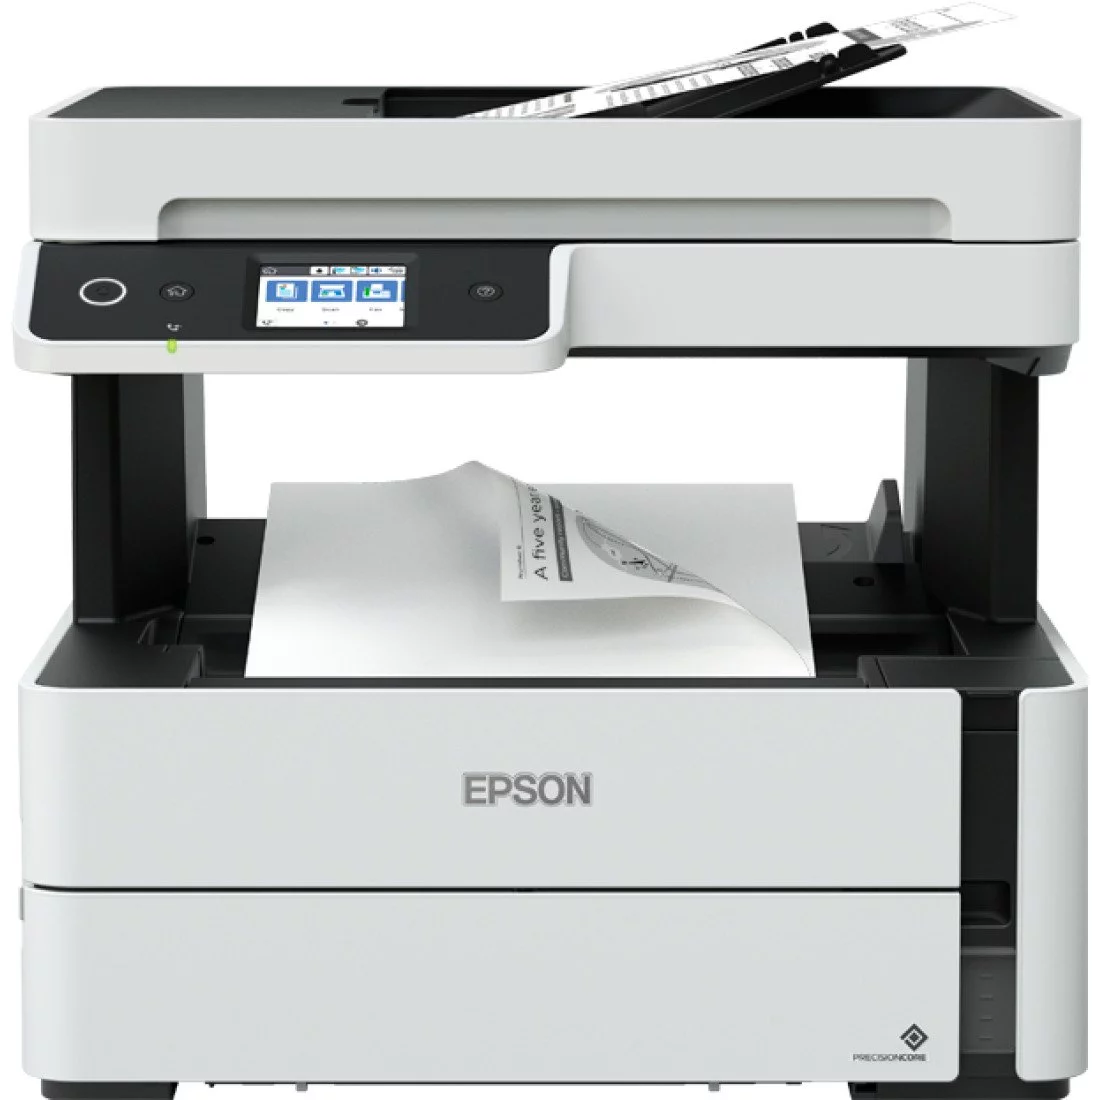 Epson EcoTank ET-15000 - Imprimante multifonction - Garantie 3 ans